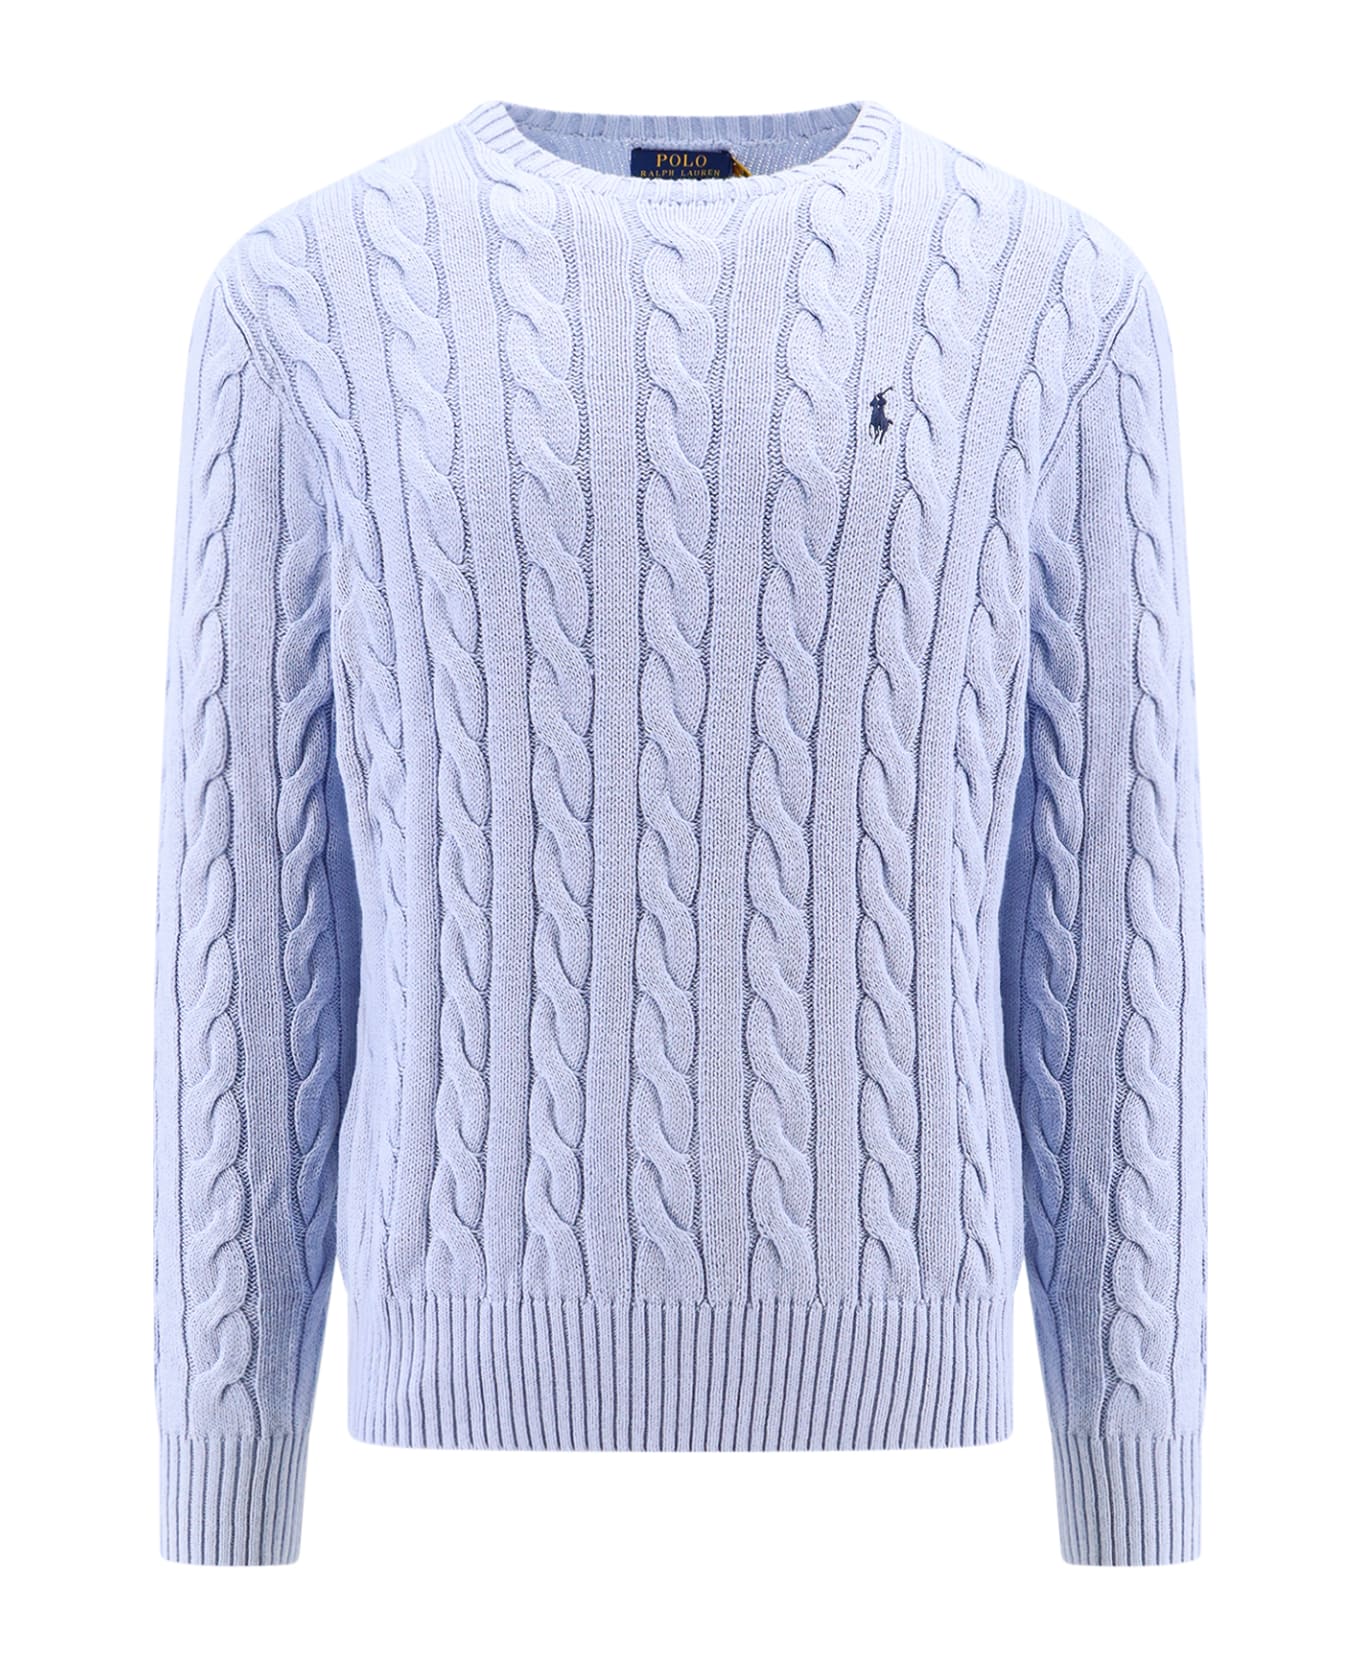 Polo Ralph Lauren Sweater - Clear Blue